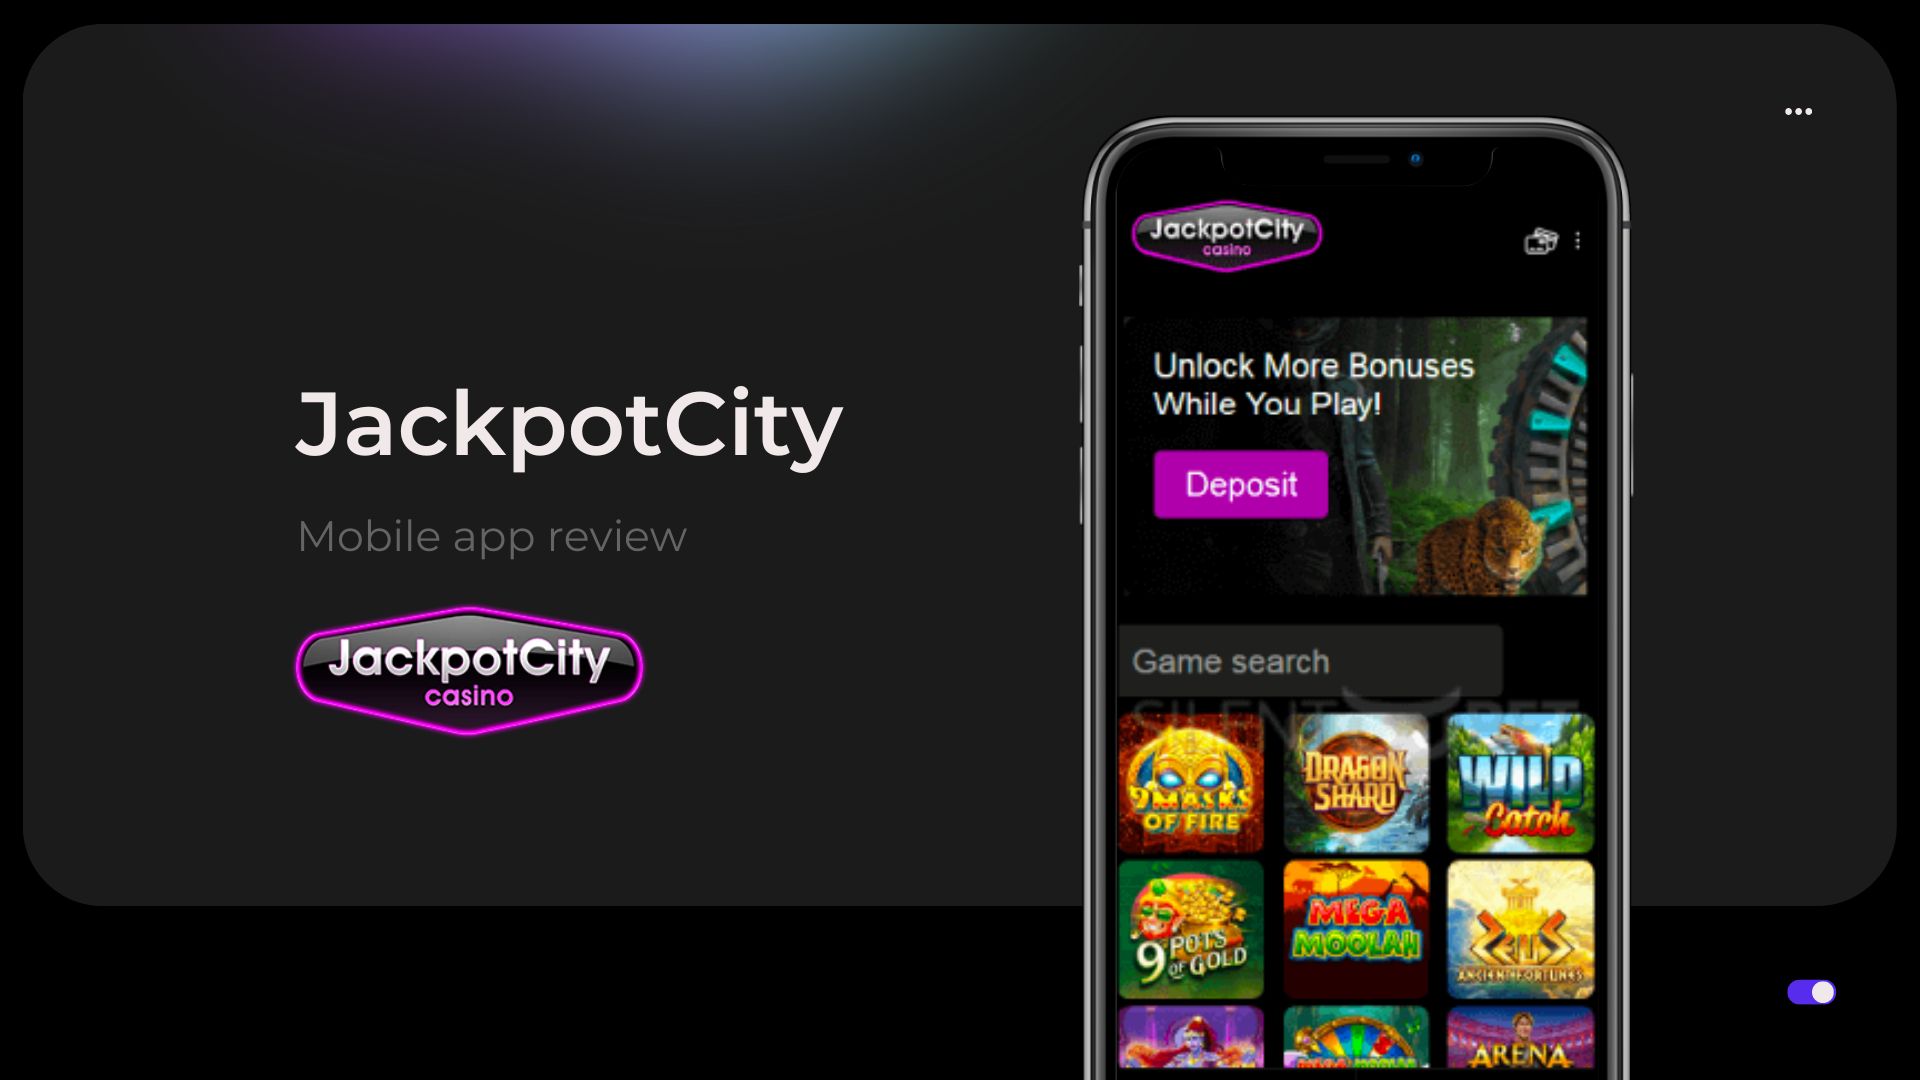 Jackpotcity mobile casino welcomes you!